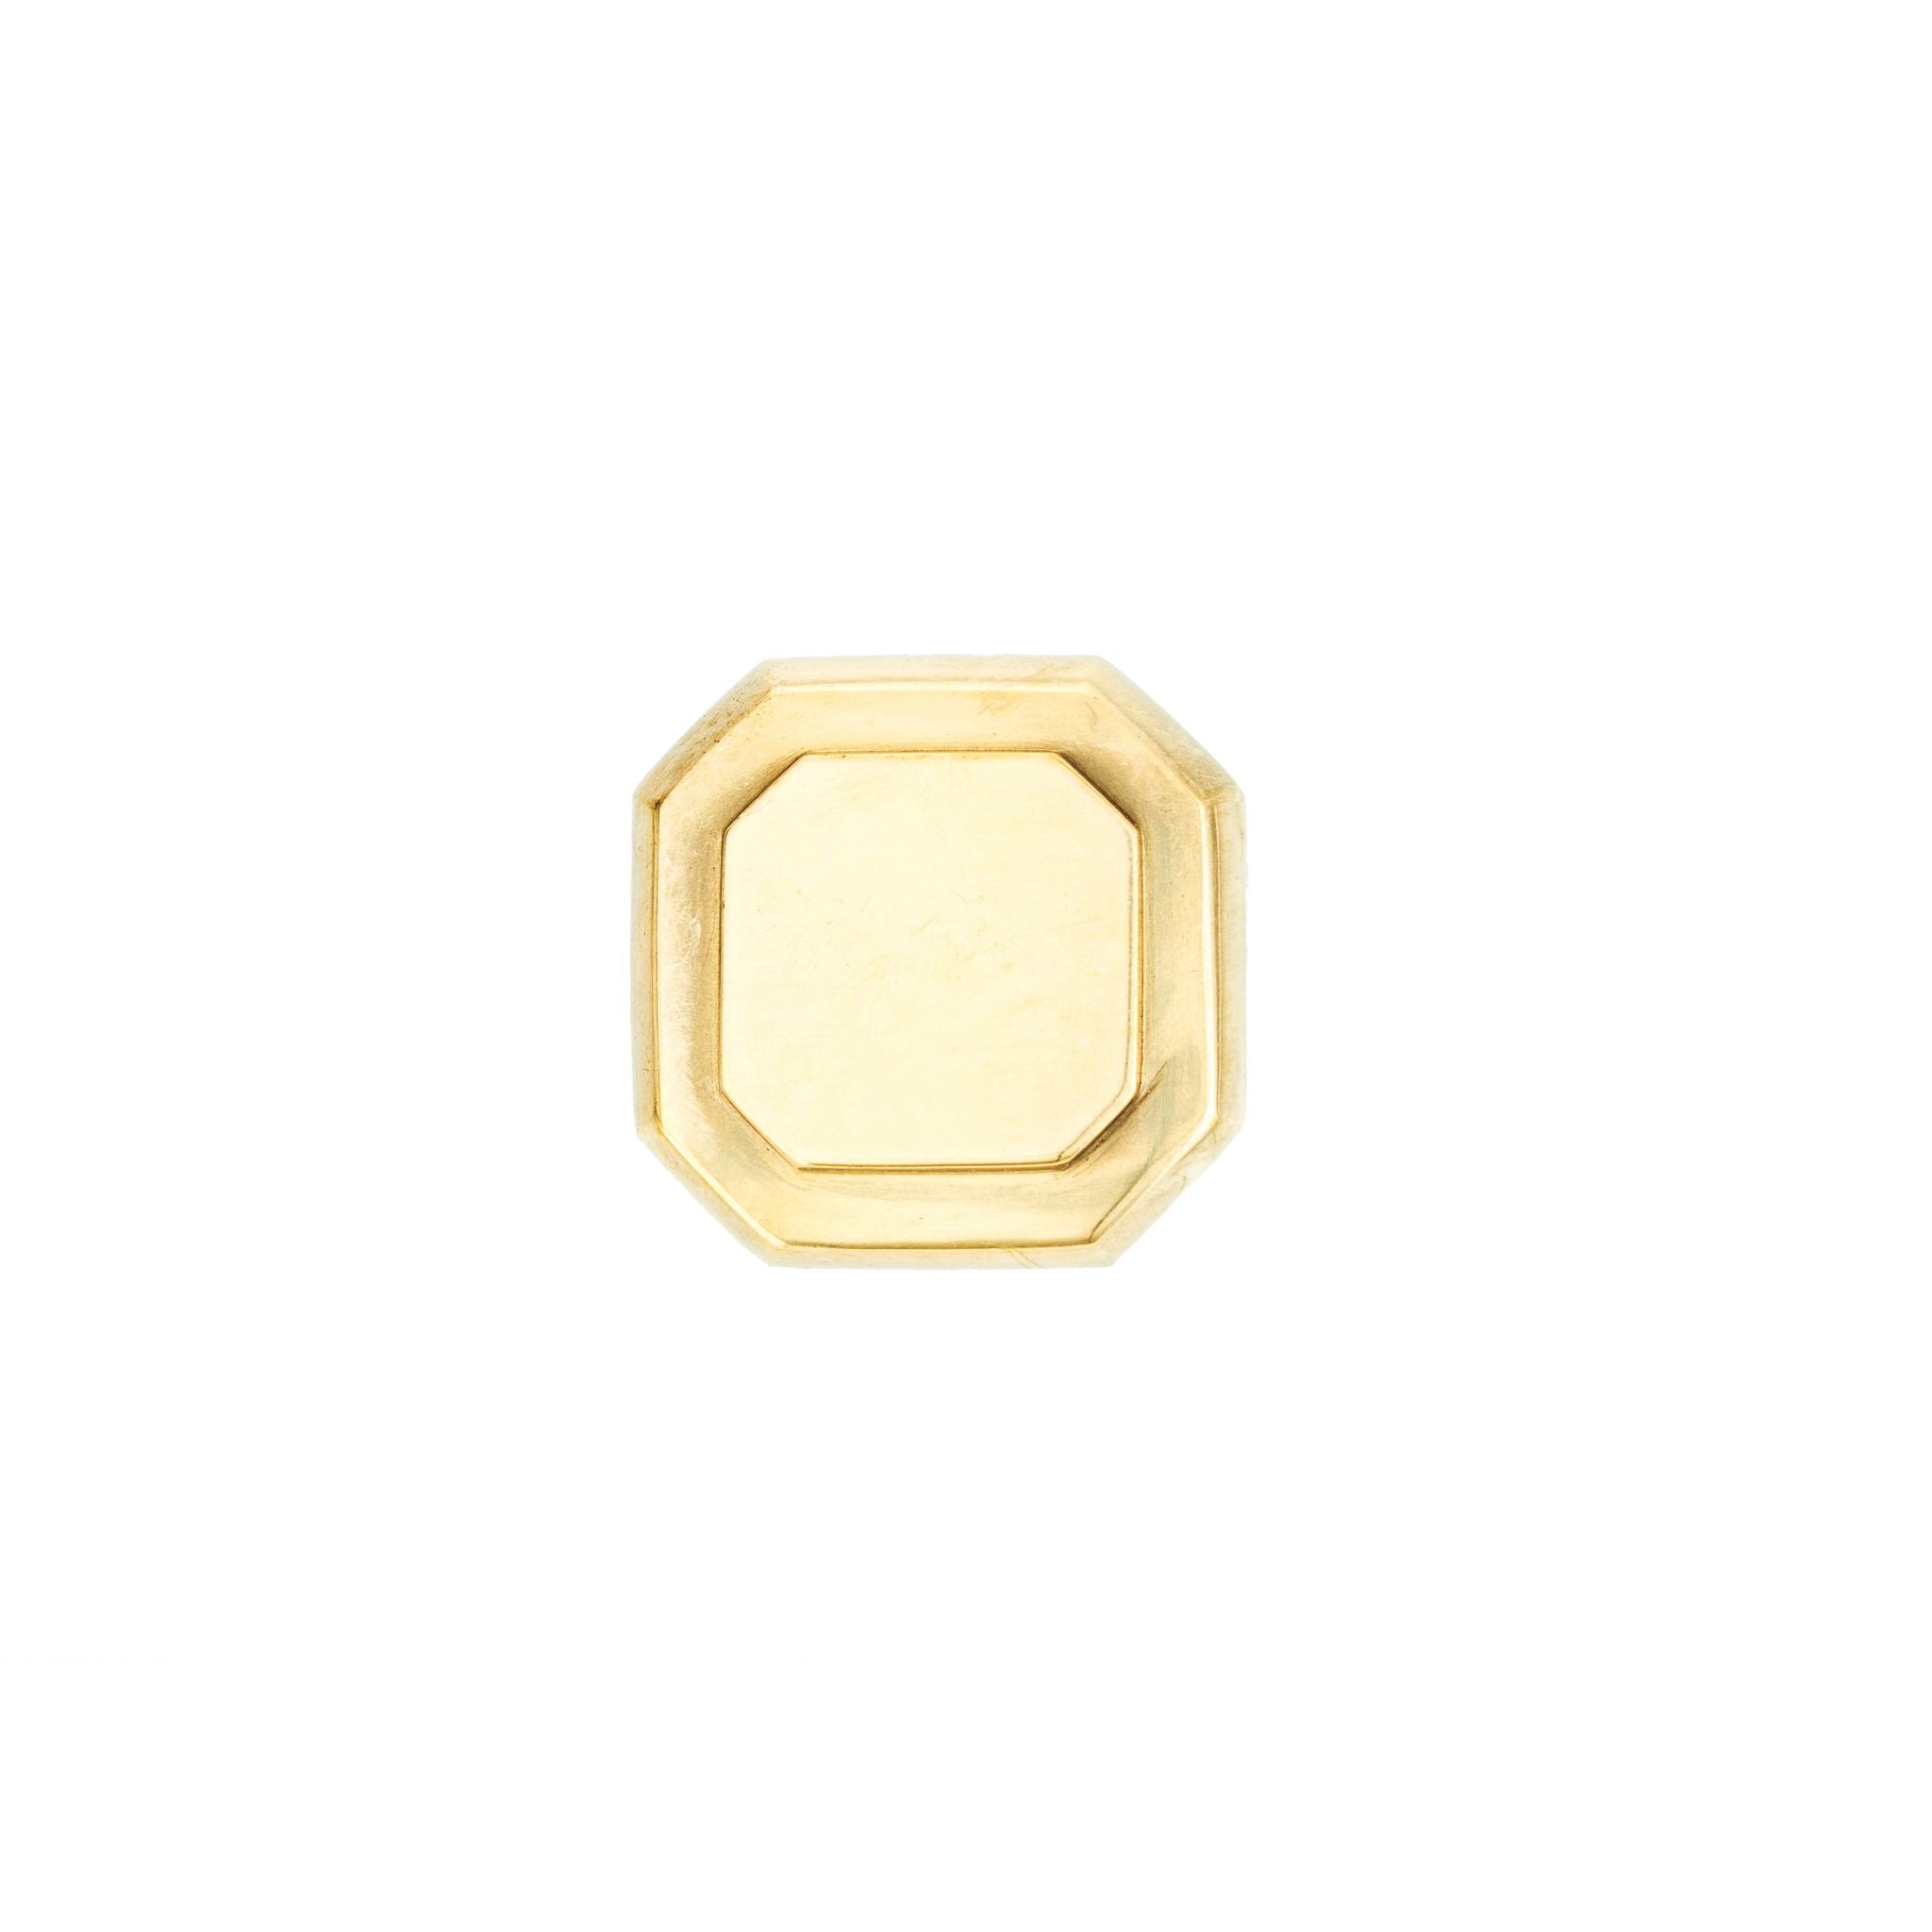 Novecento brass octagonal square knob - ilbronzetto